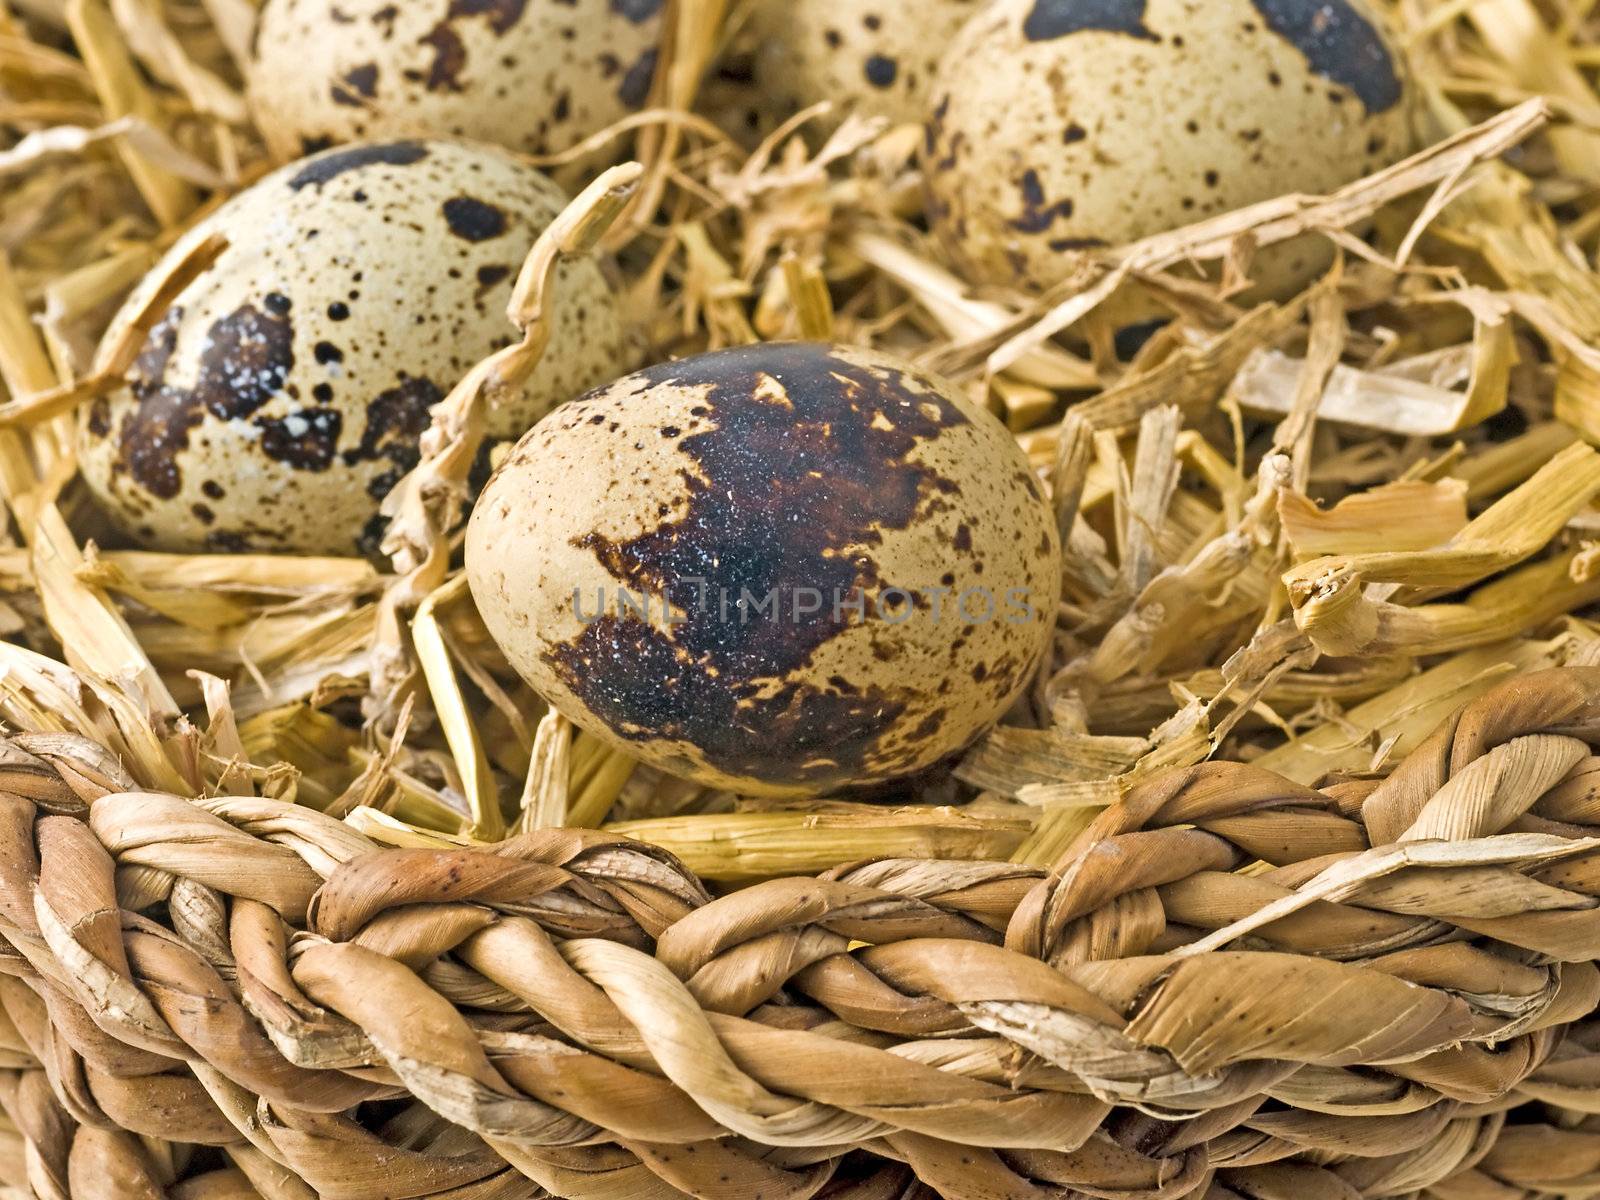 eggs of quail by Jochen